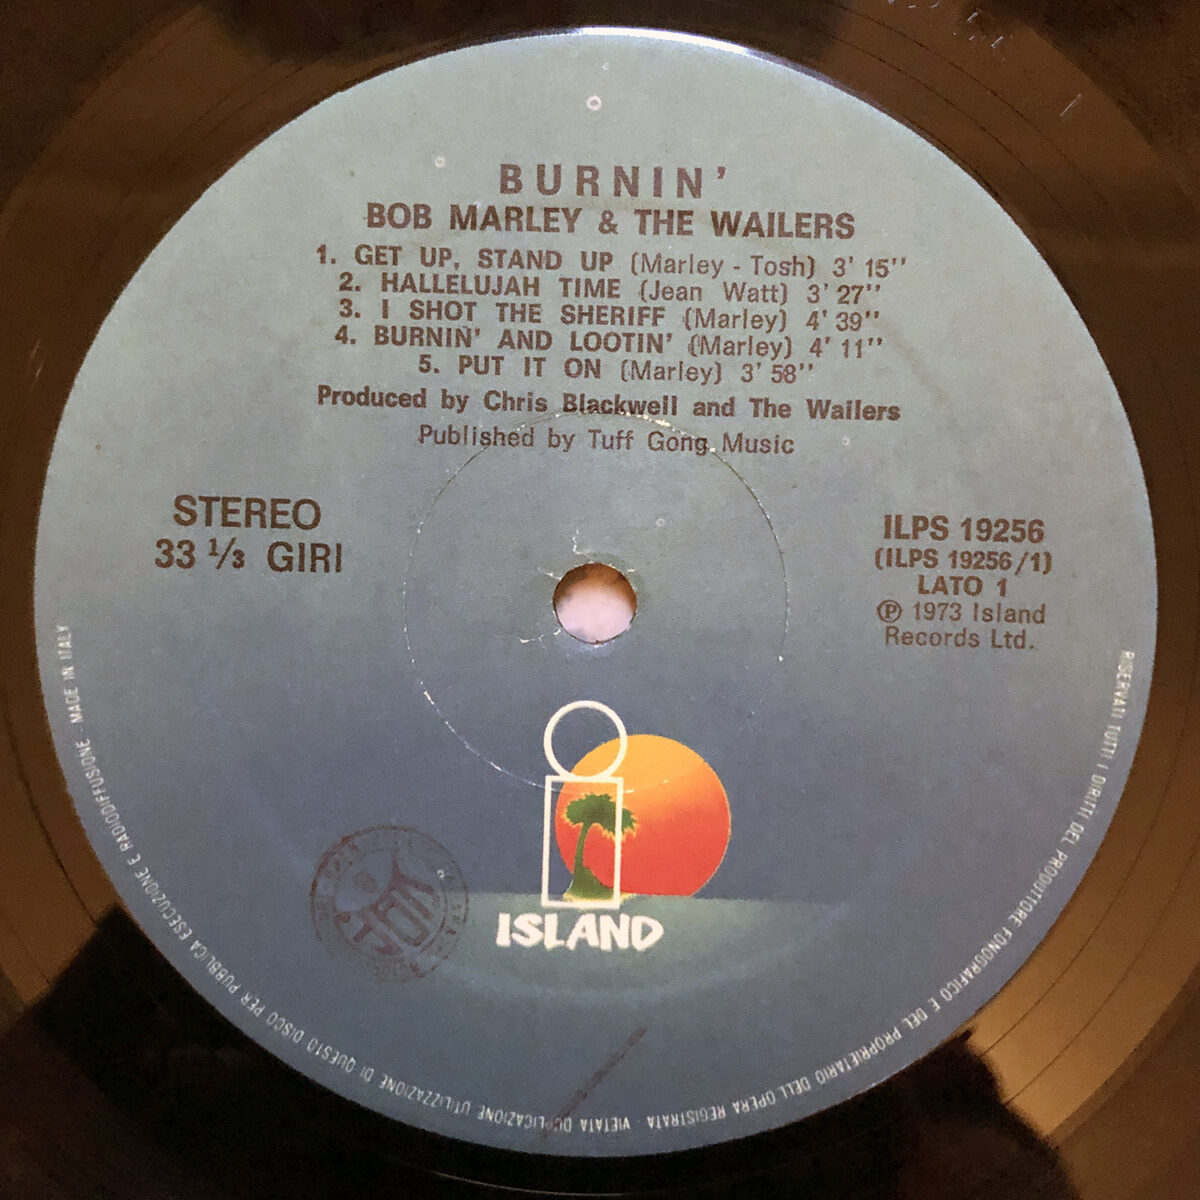 Burnin' by Bob Marley and the Wailers